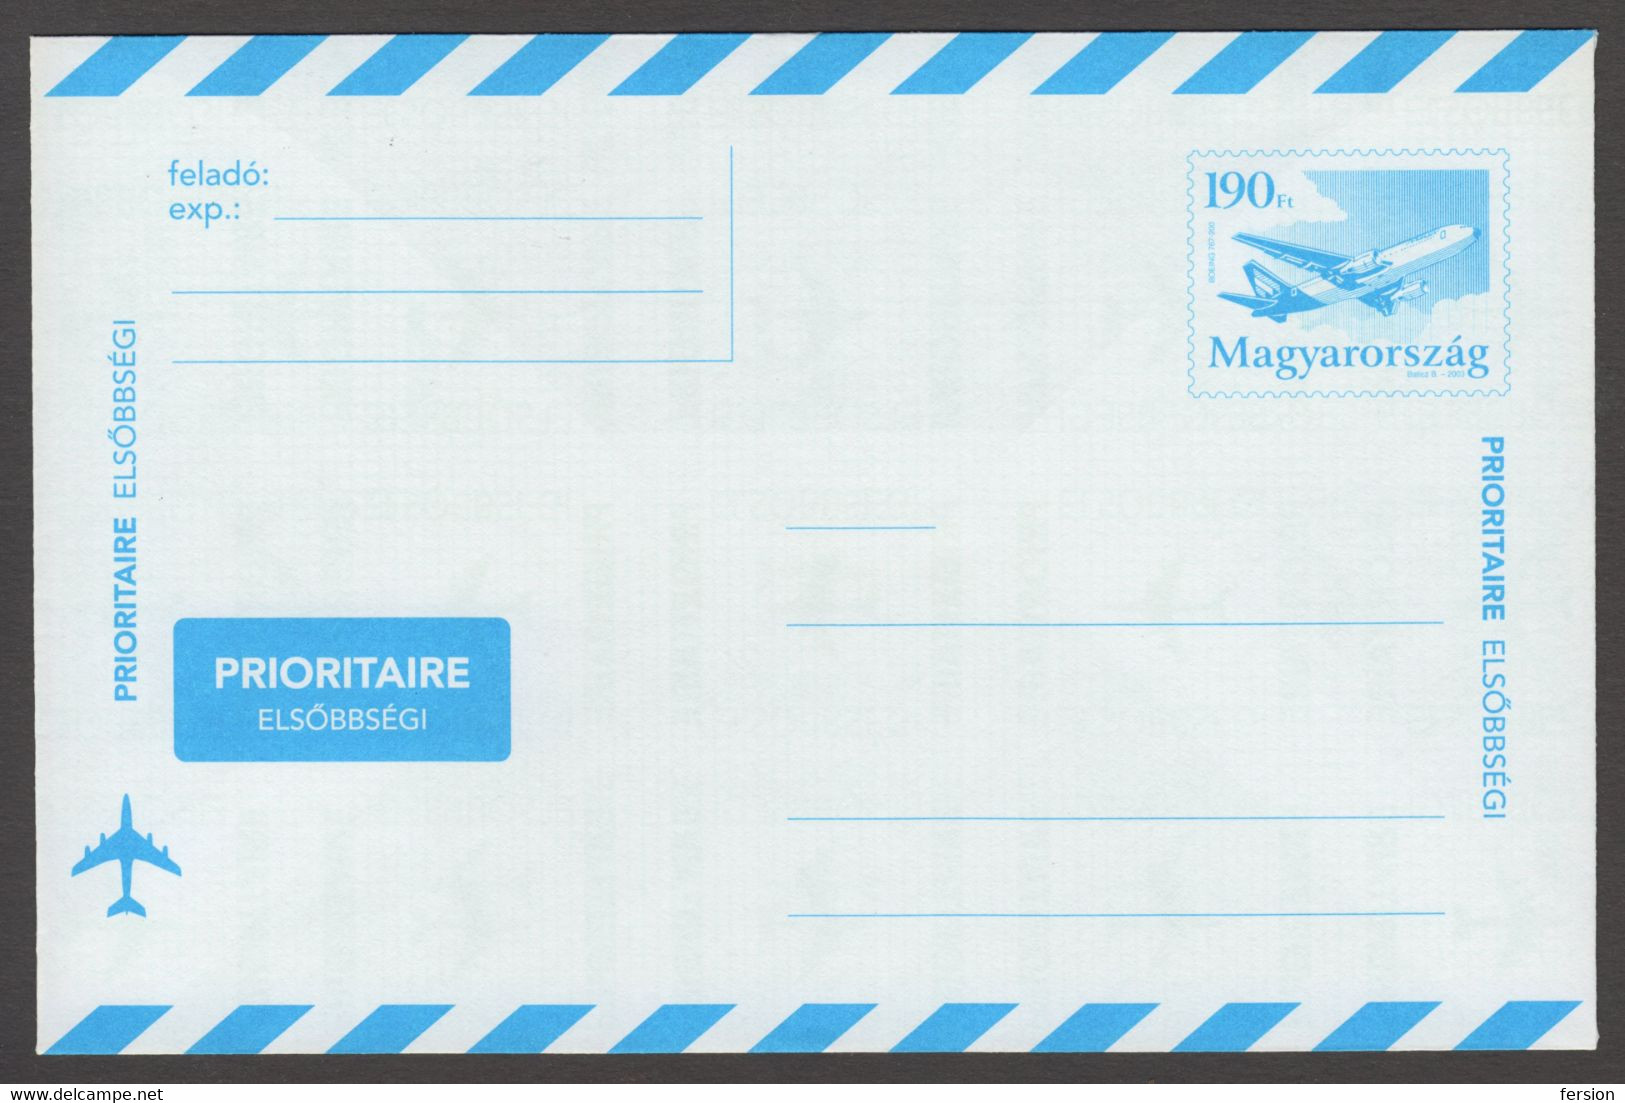 BOEING 737 MALÉV Airplane Airliner 2003 Hungary AIR MAIL PAR AVION Postal Stationery 190 Ft Cover Letter Envelope - Storia Postale